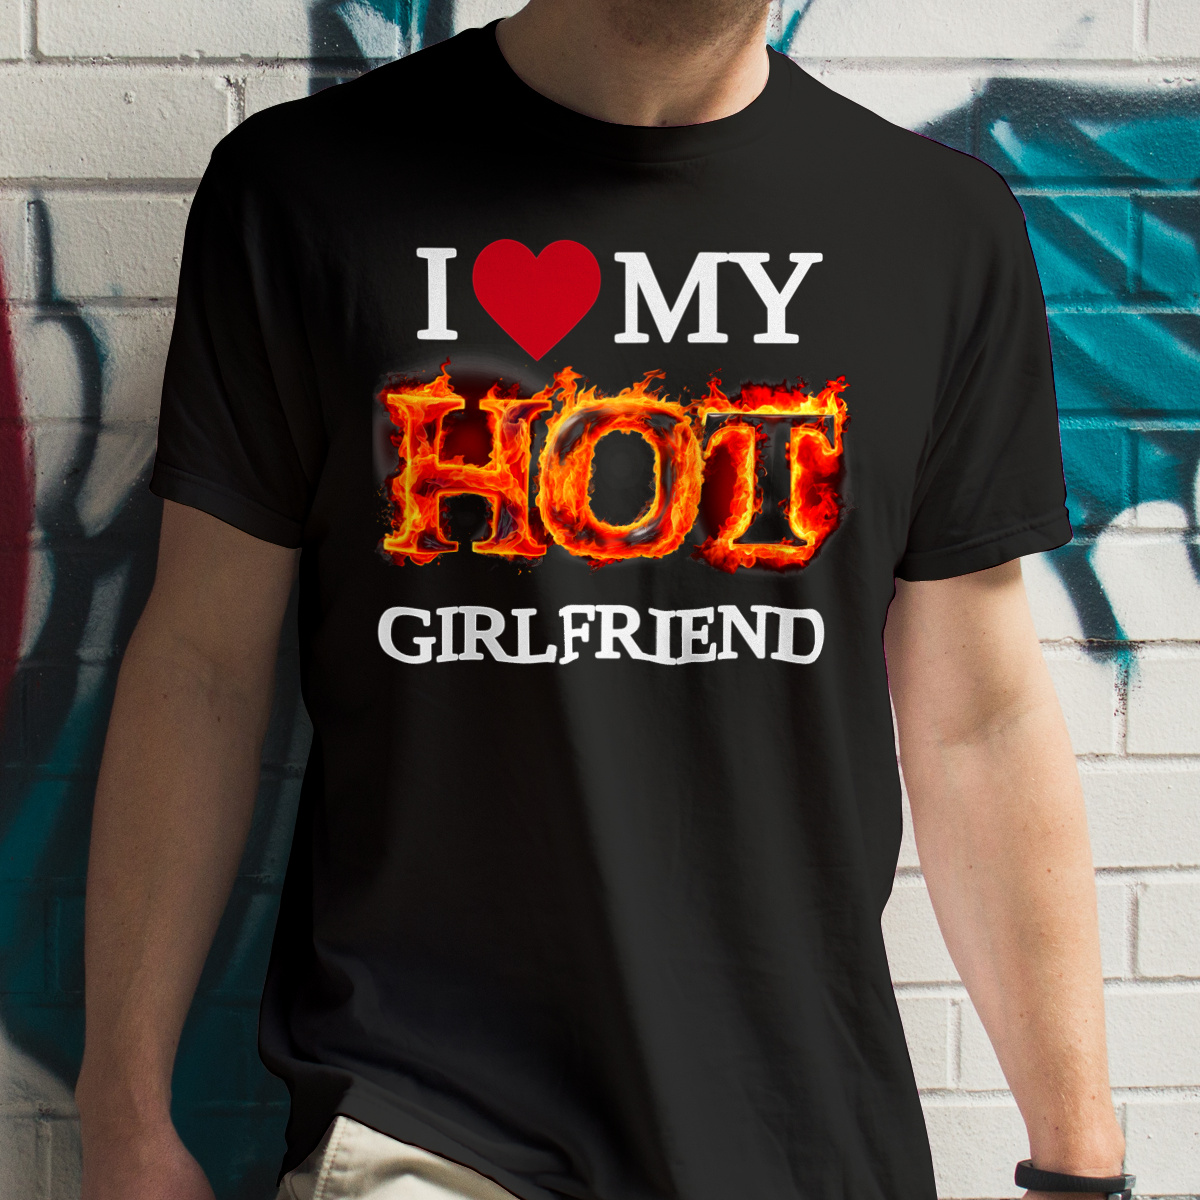 I Love My Hot GF 2 - Męska Koszulka Czarna